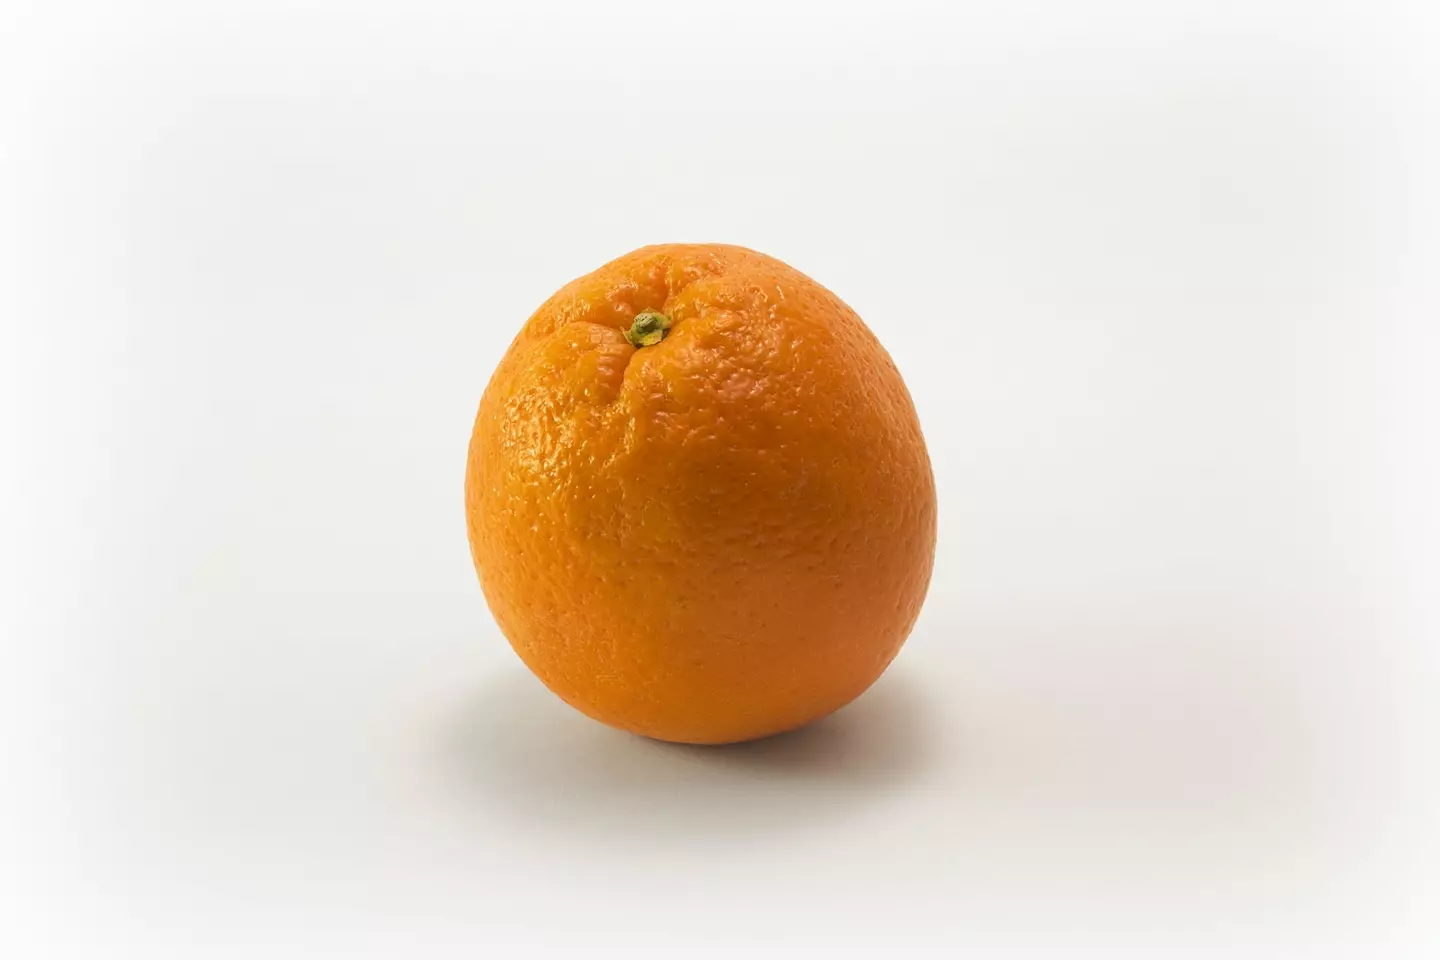 Oranges are no match for Eminem.